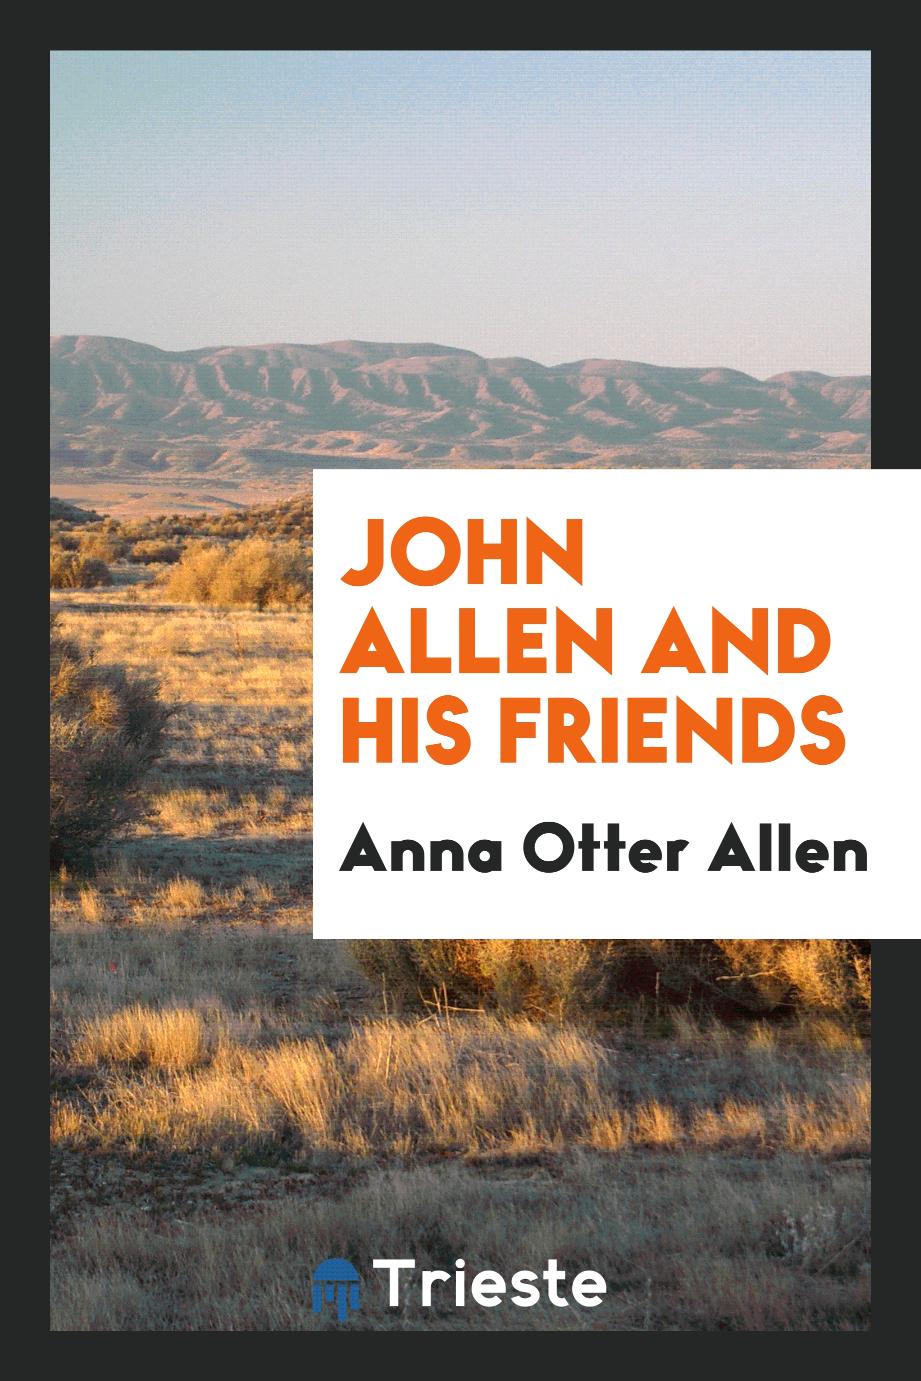 John Allen and his friends